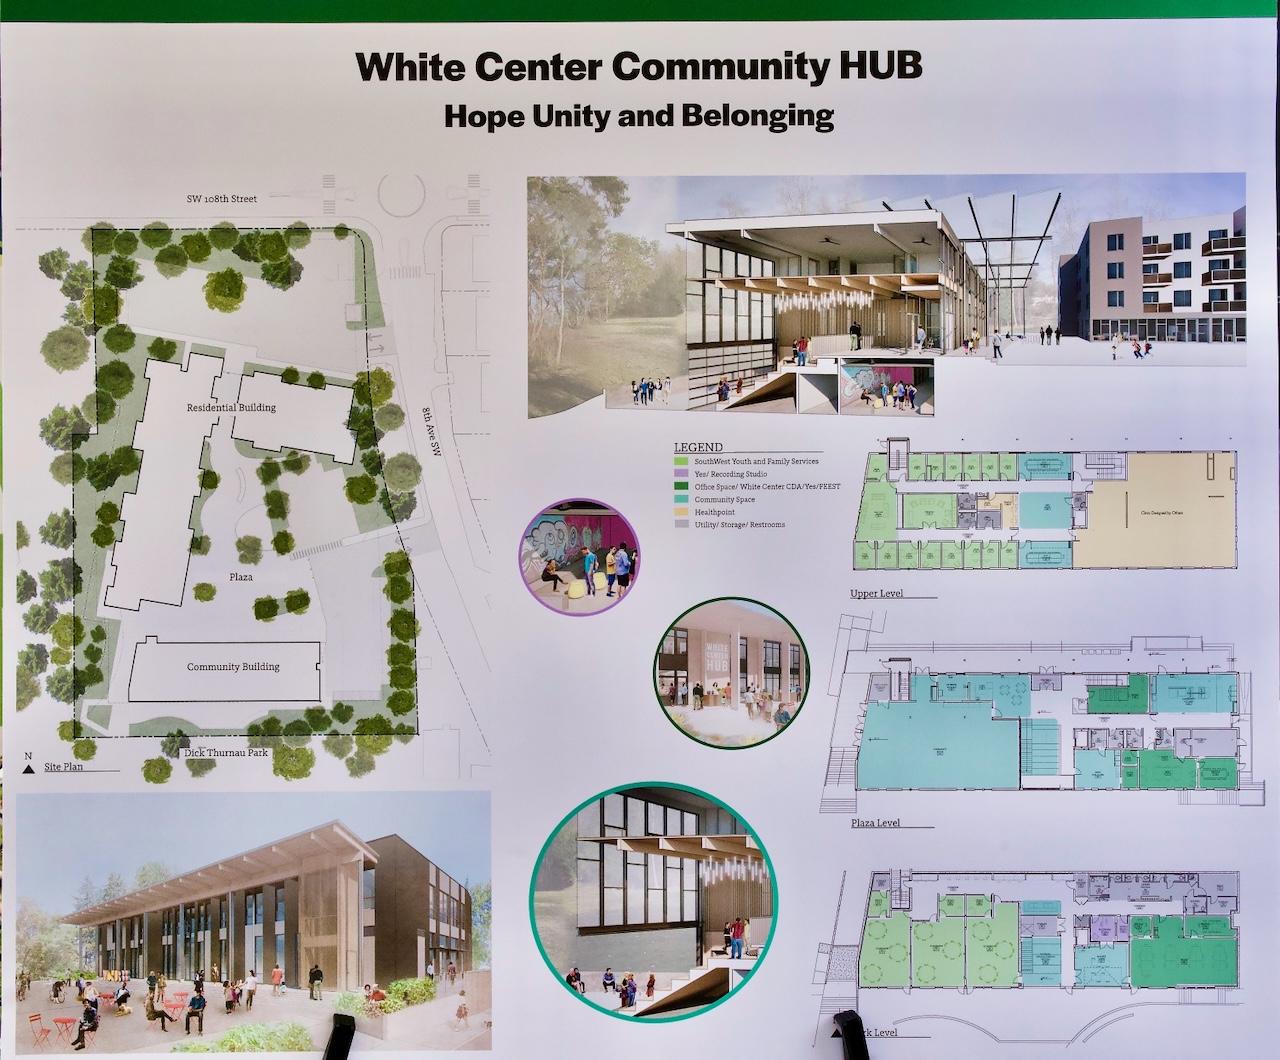 The community HUB plan